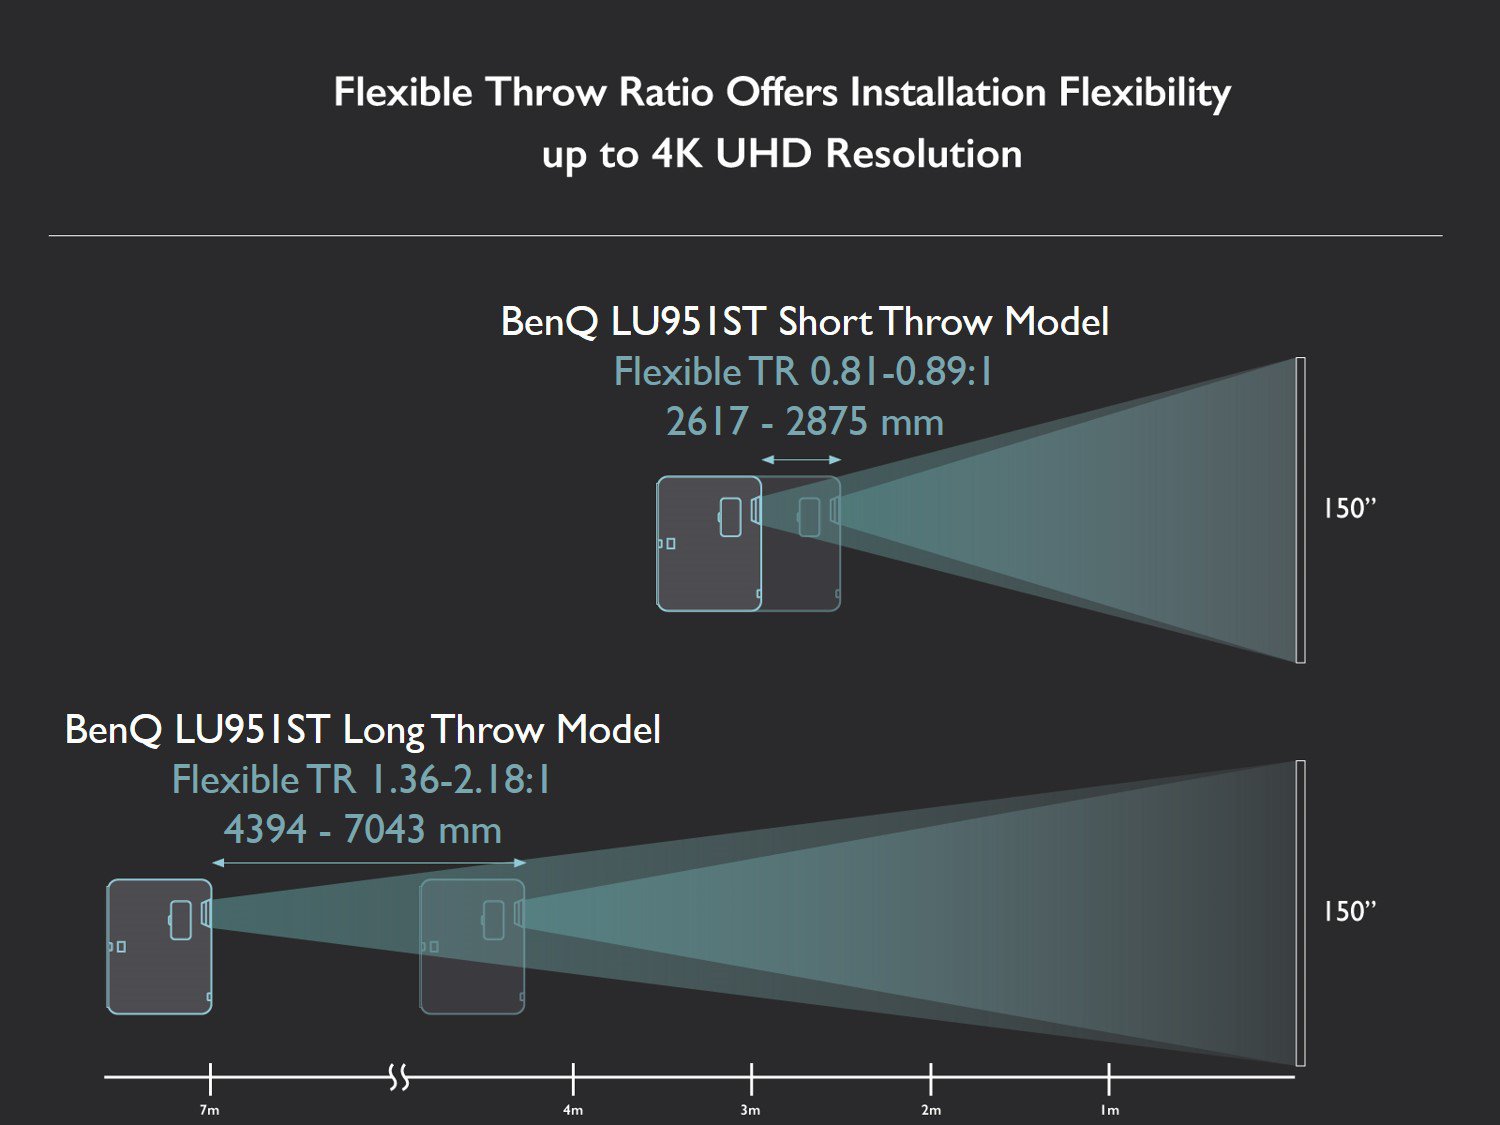 BenQ Flexible throw ratio offers installation flexibility up to 4K UHD resolution